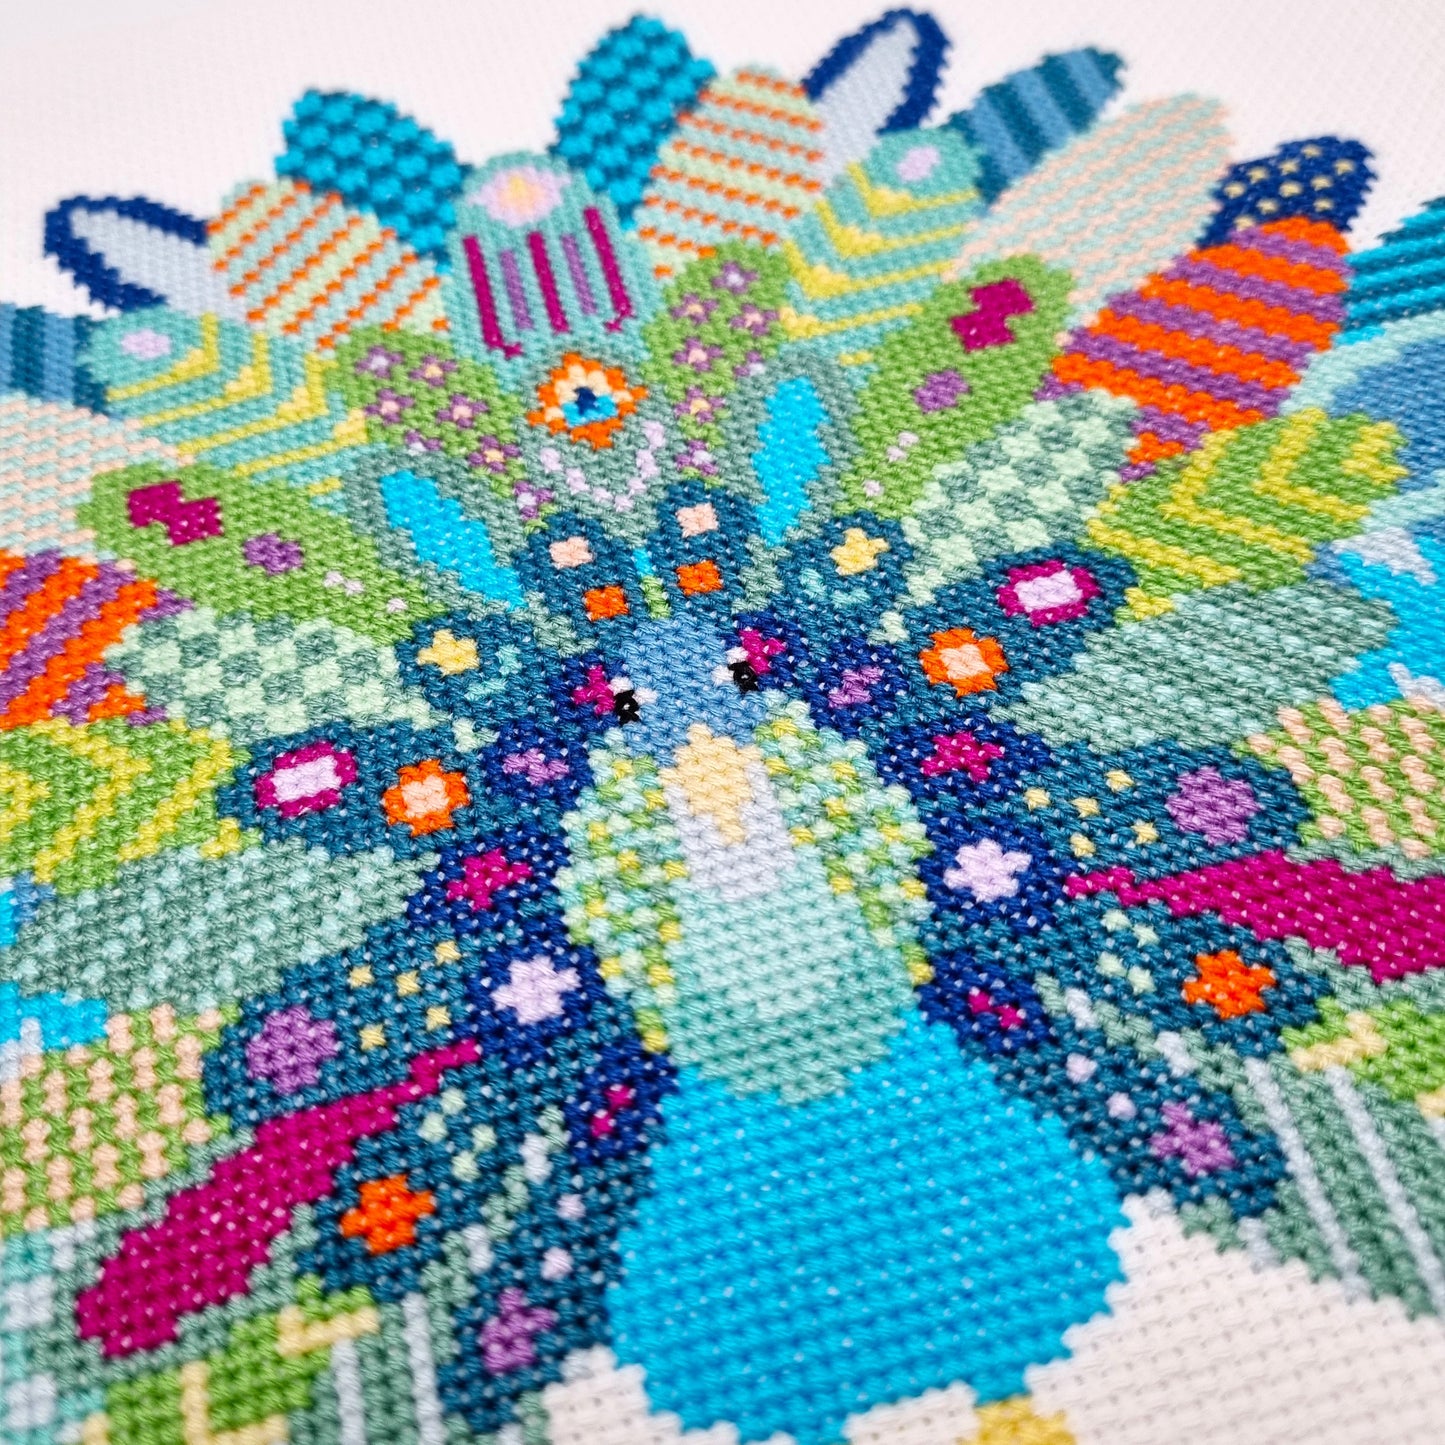 Mandala Peacock Cross Stitch Kit